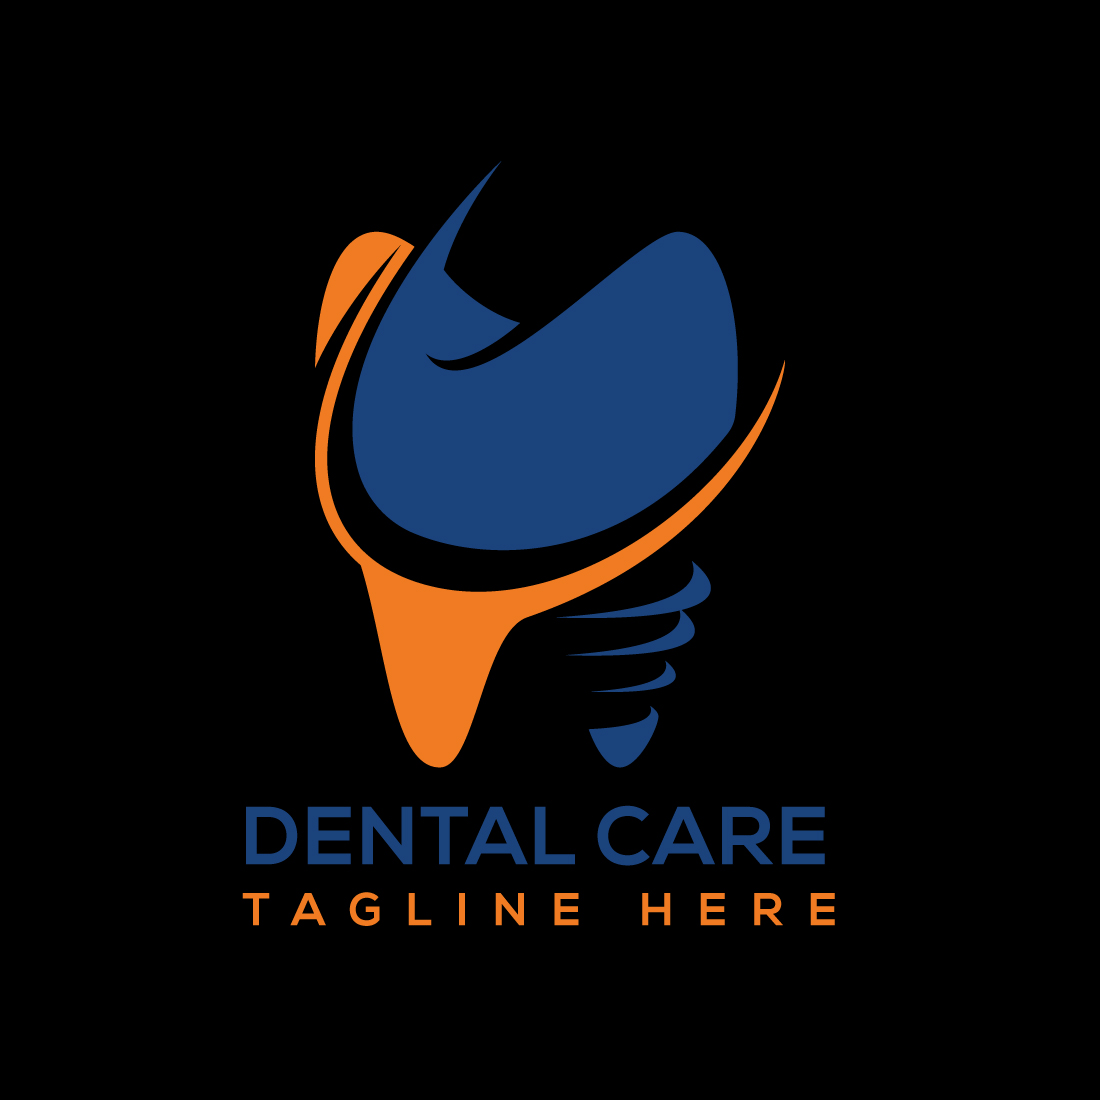 Image of irresistible tooth shaped logo on black background.